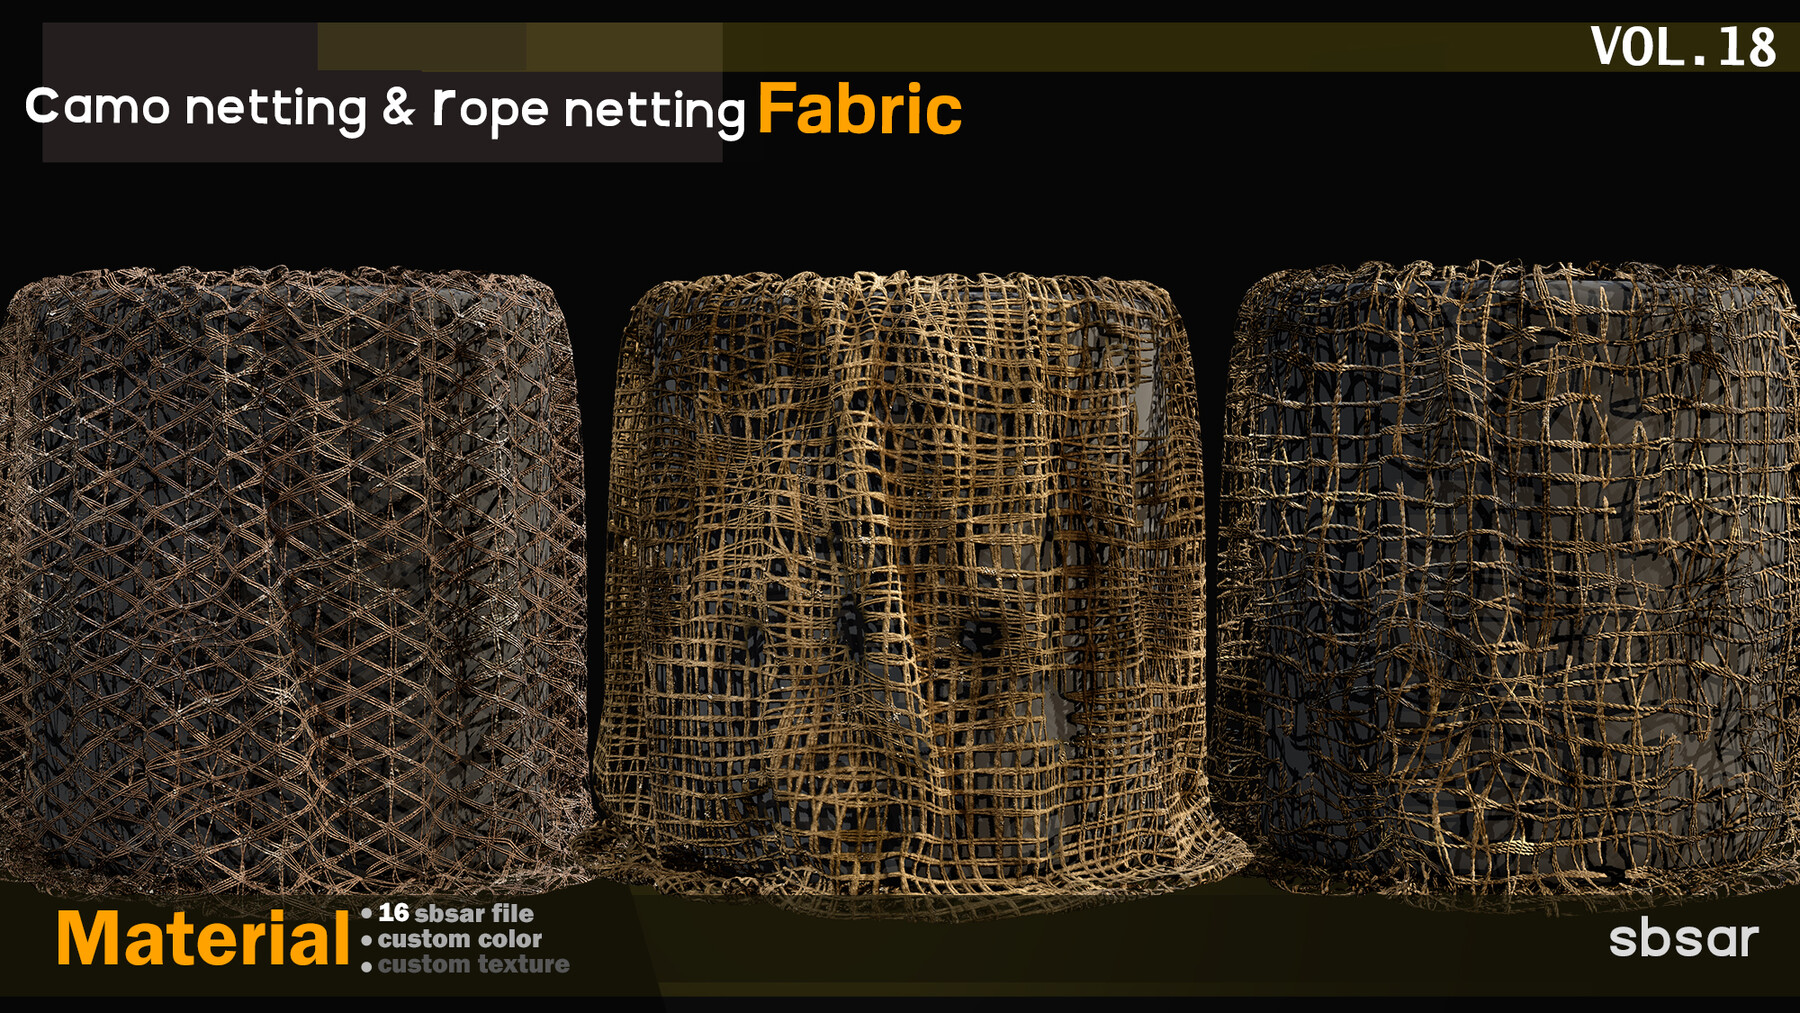 ArtStation - camo netting & rope netting fabric Material -SBSAR -custom  color/ custom fabric -VOL 18